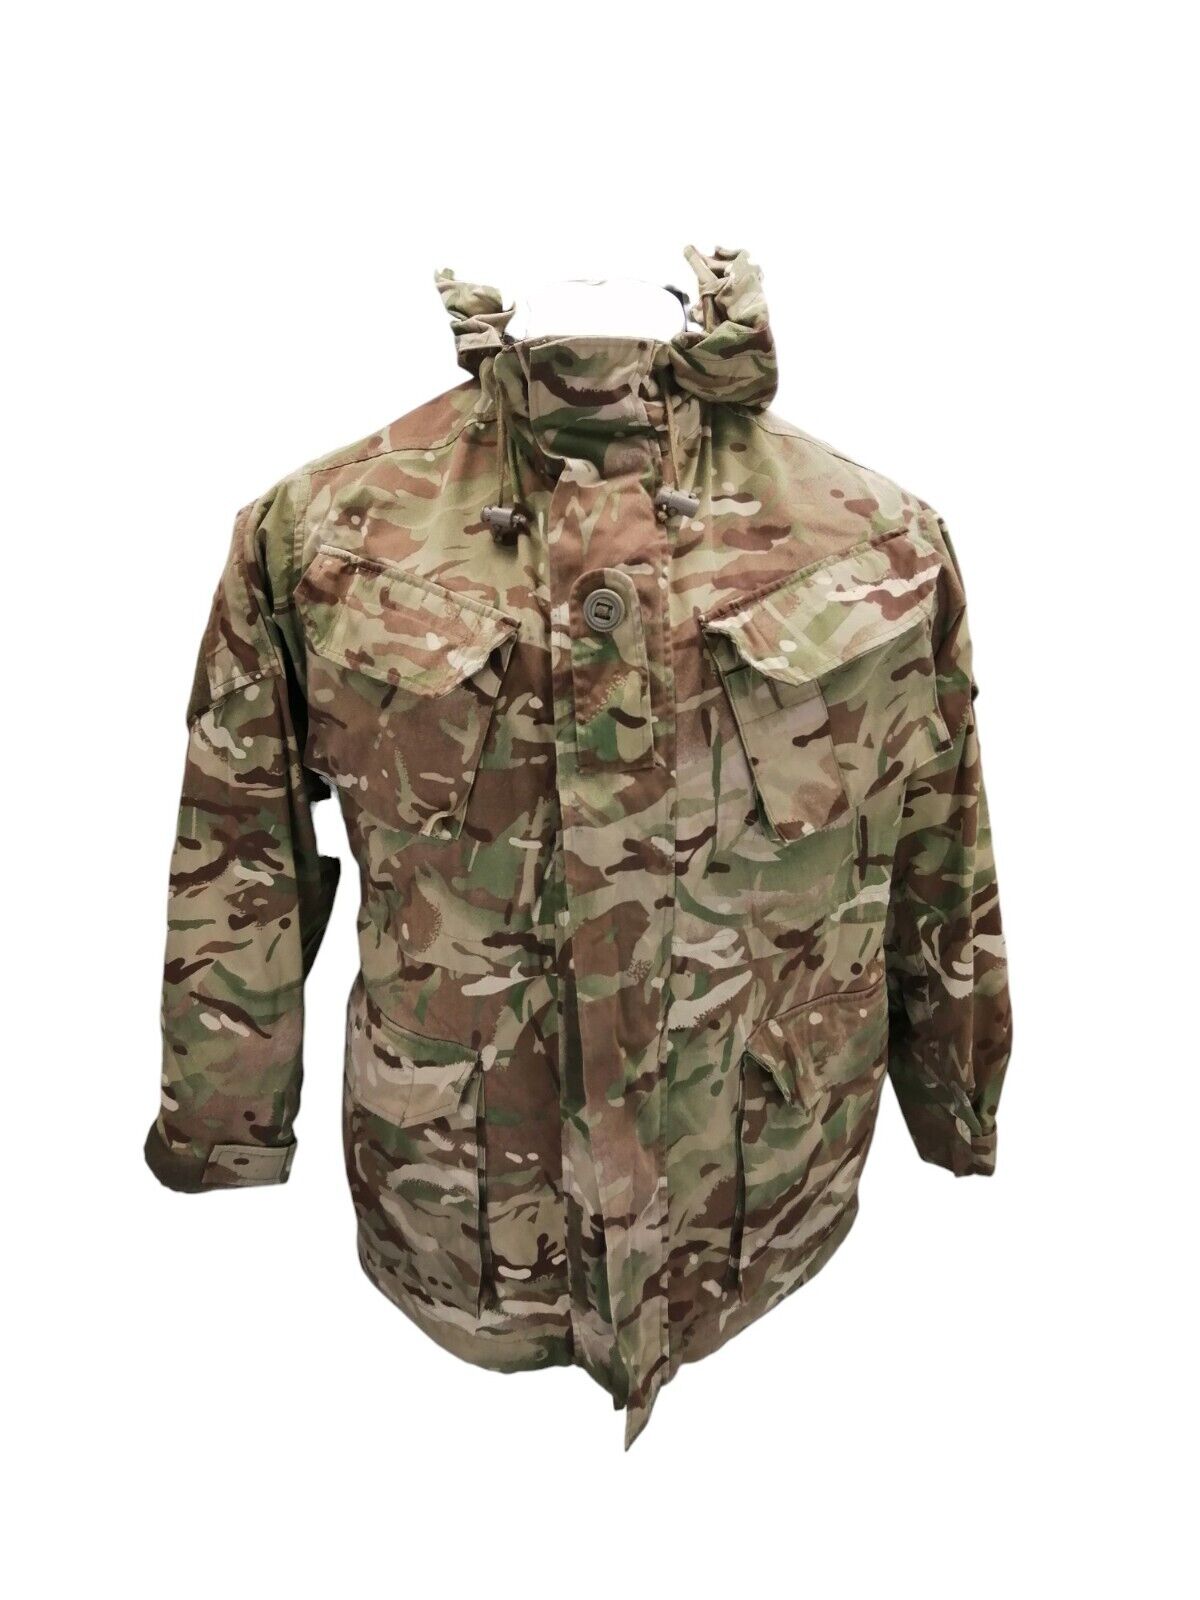 British Army MTP Waterproof Smock Lined MVP Jacket Coat 170/88